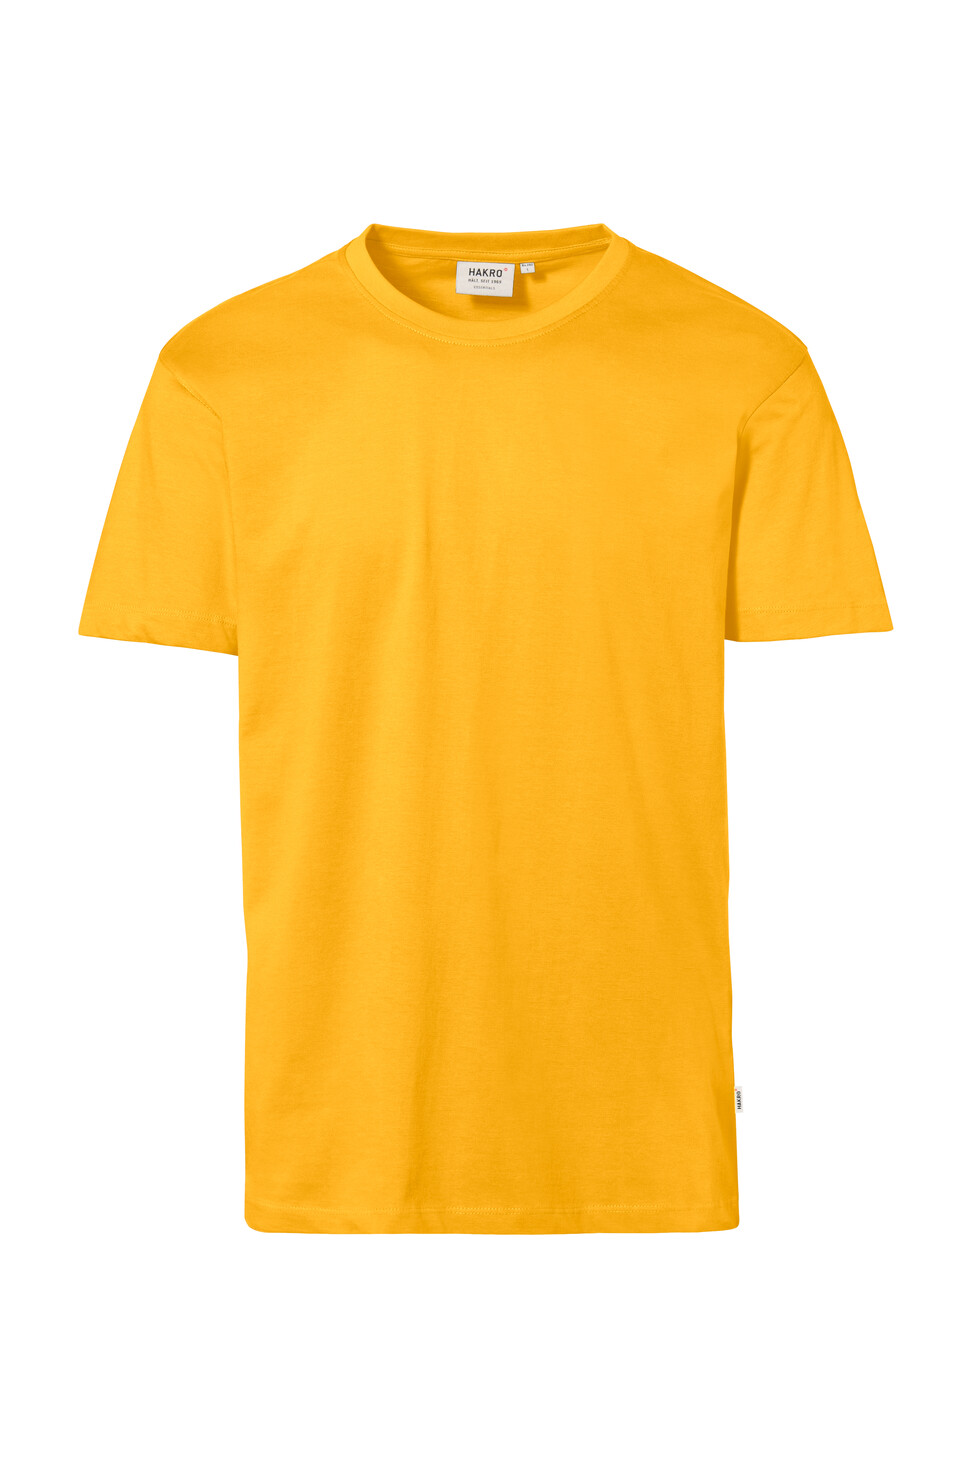 HAKRO T-Shirt Classic, sonne, S, 292